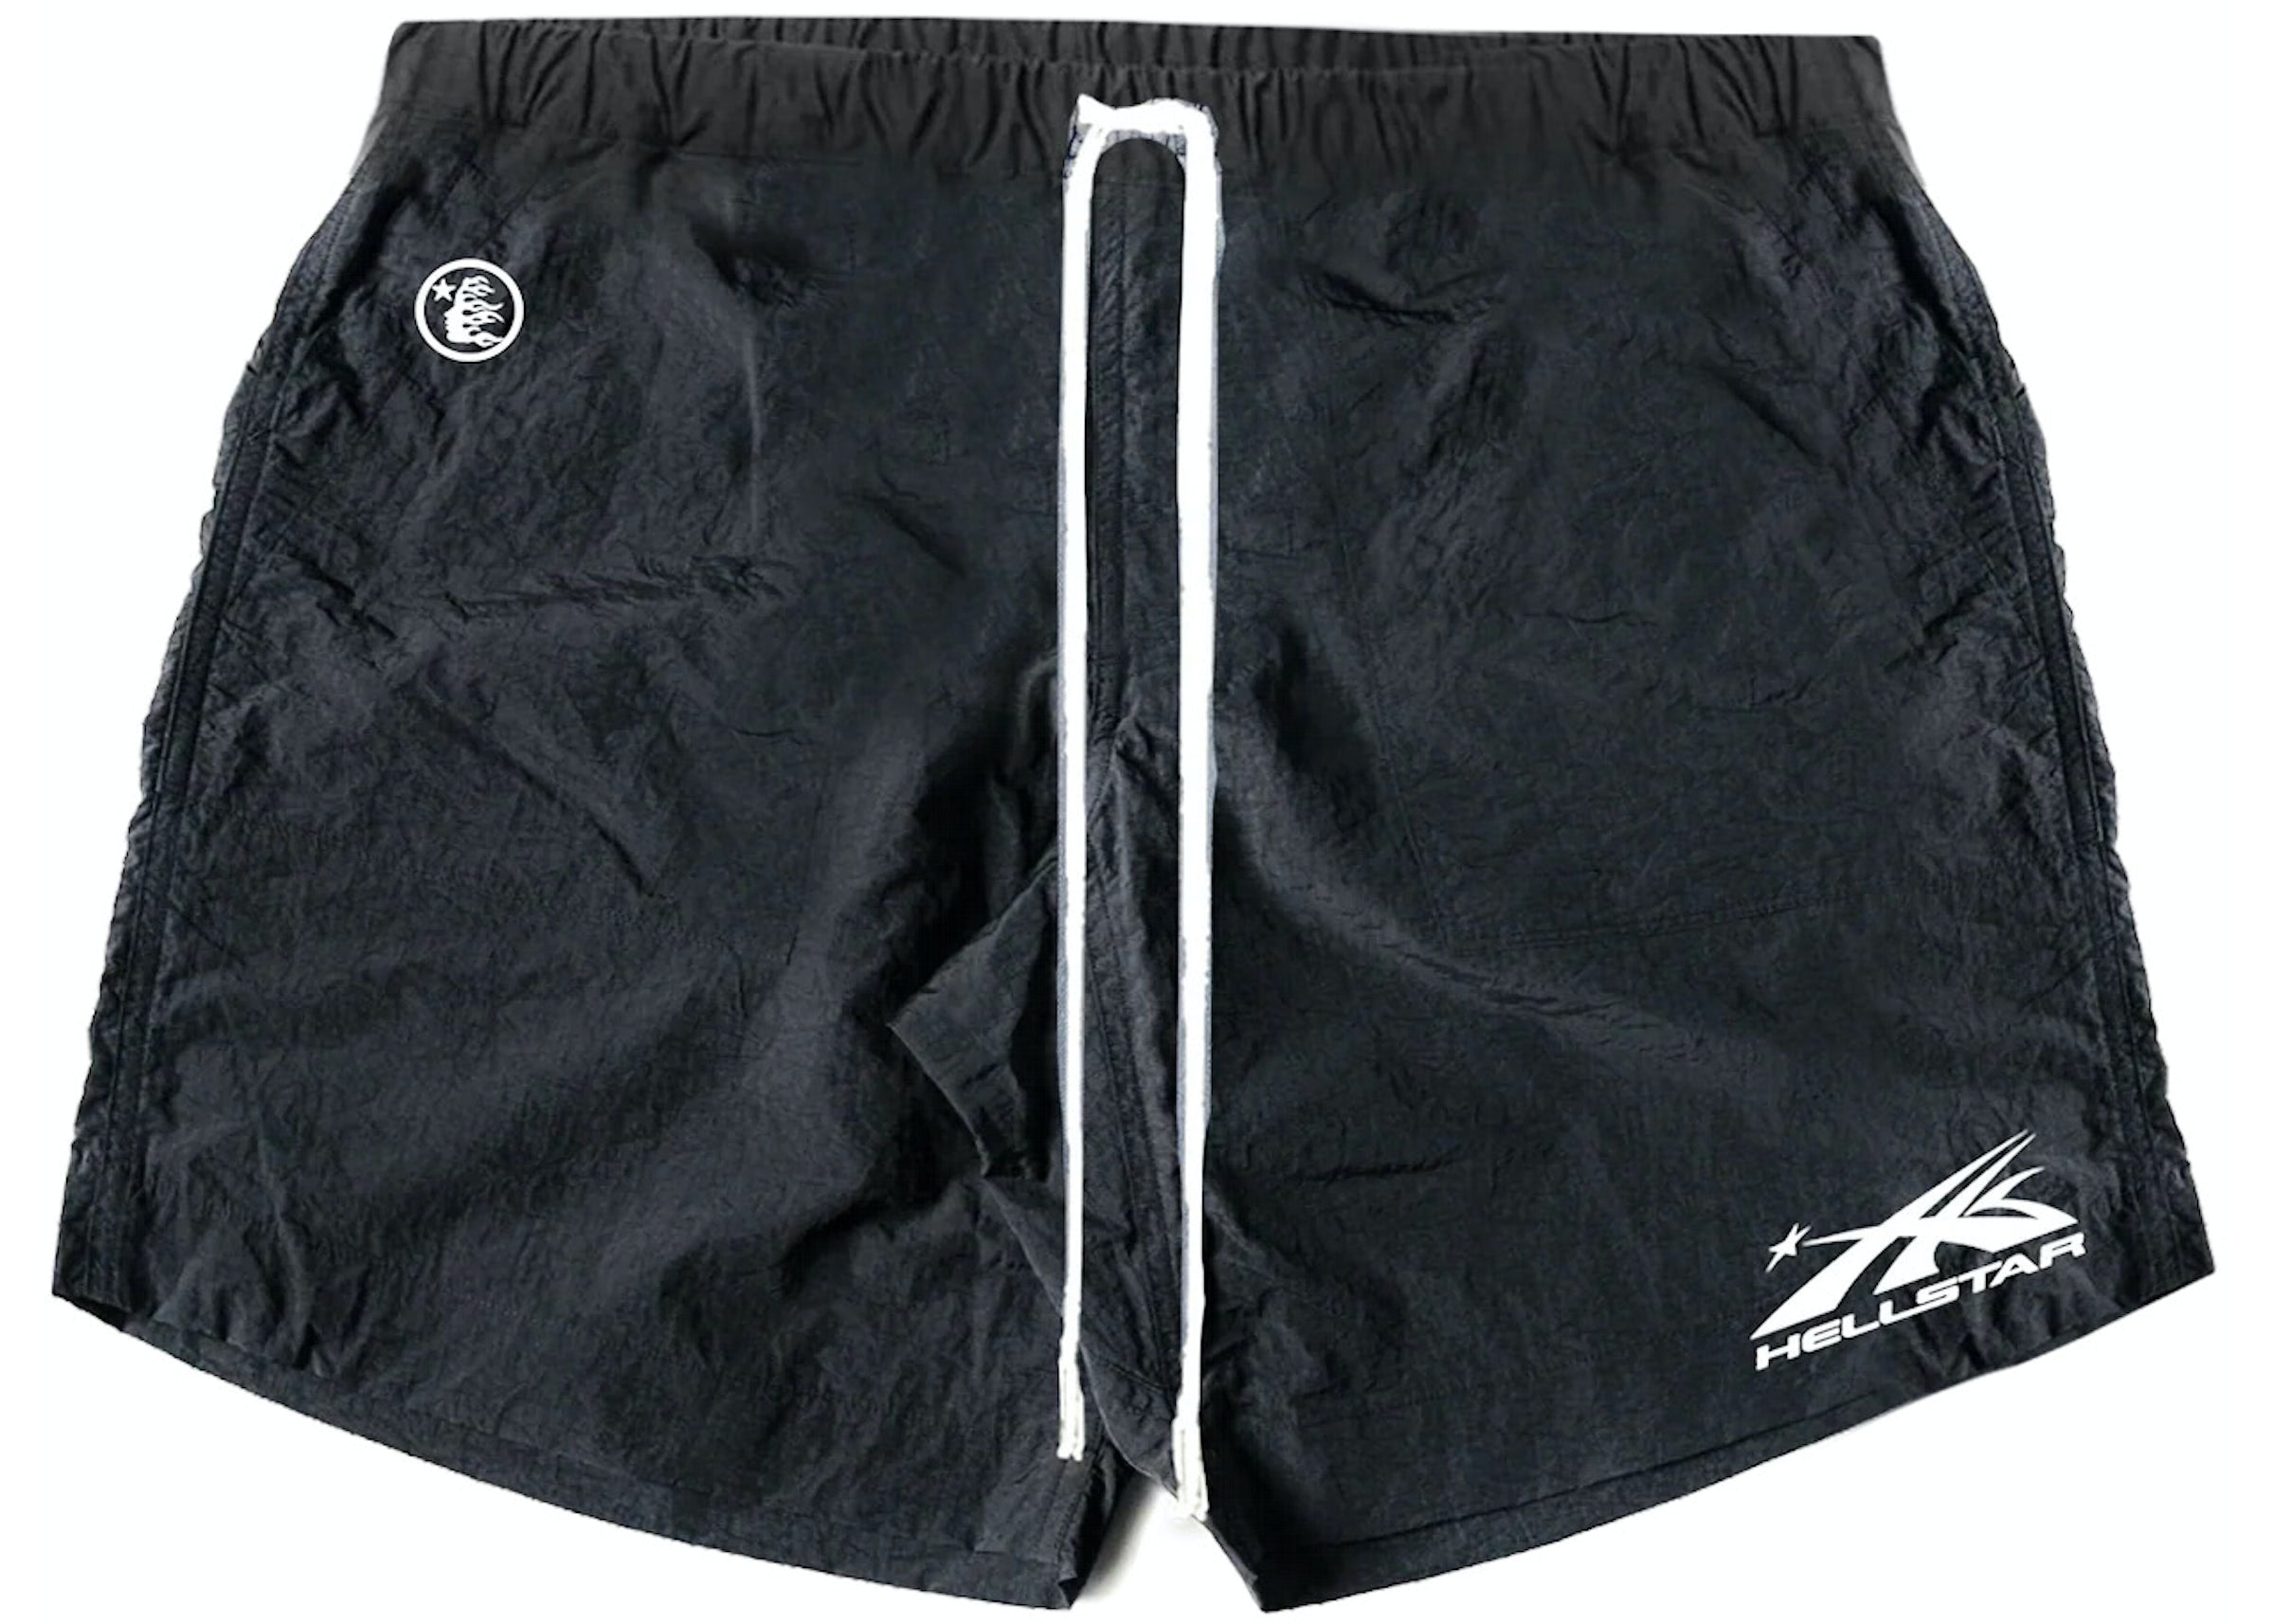 Hellstar Studios Capsule 10 Nylon Shorts Black